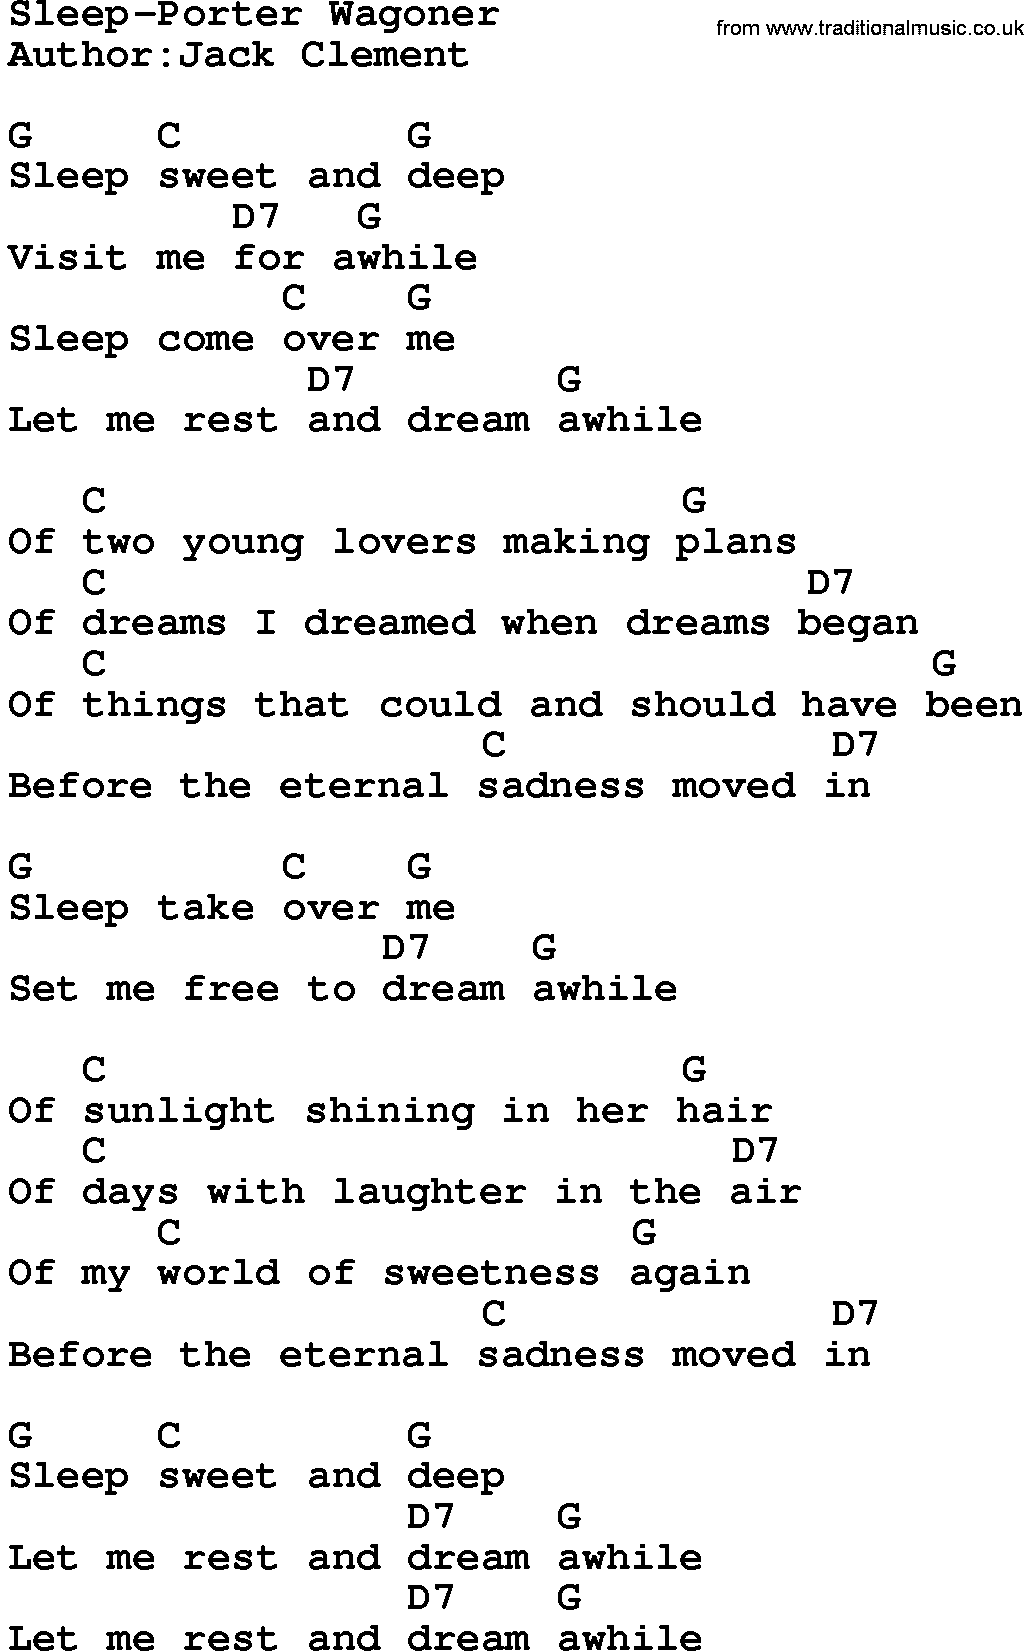 Country music song: Sleep-Porter Wagoner lyrics and chords